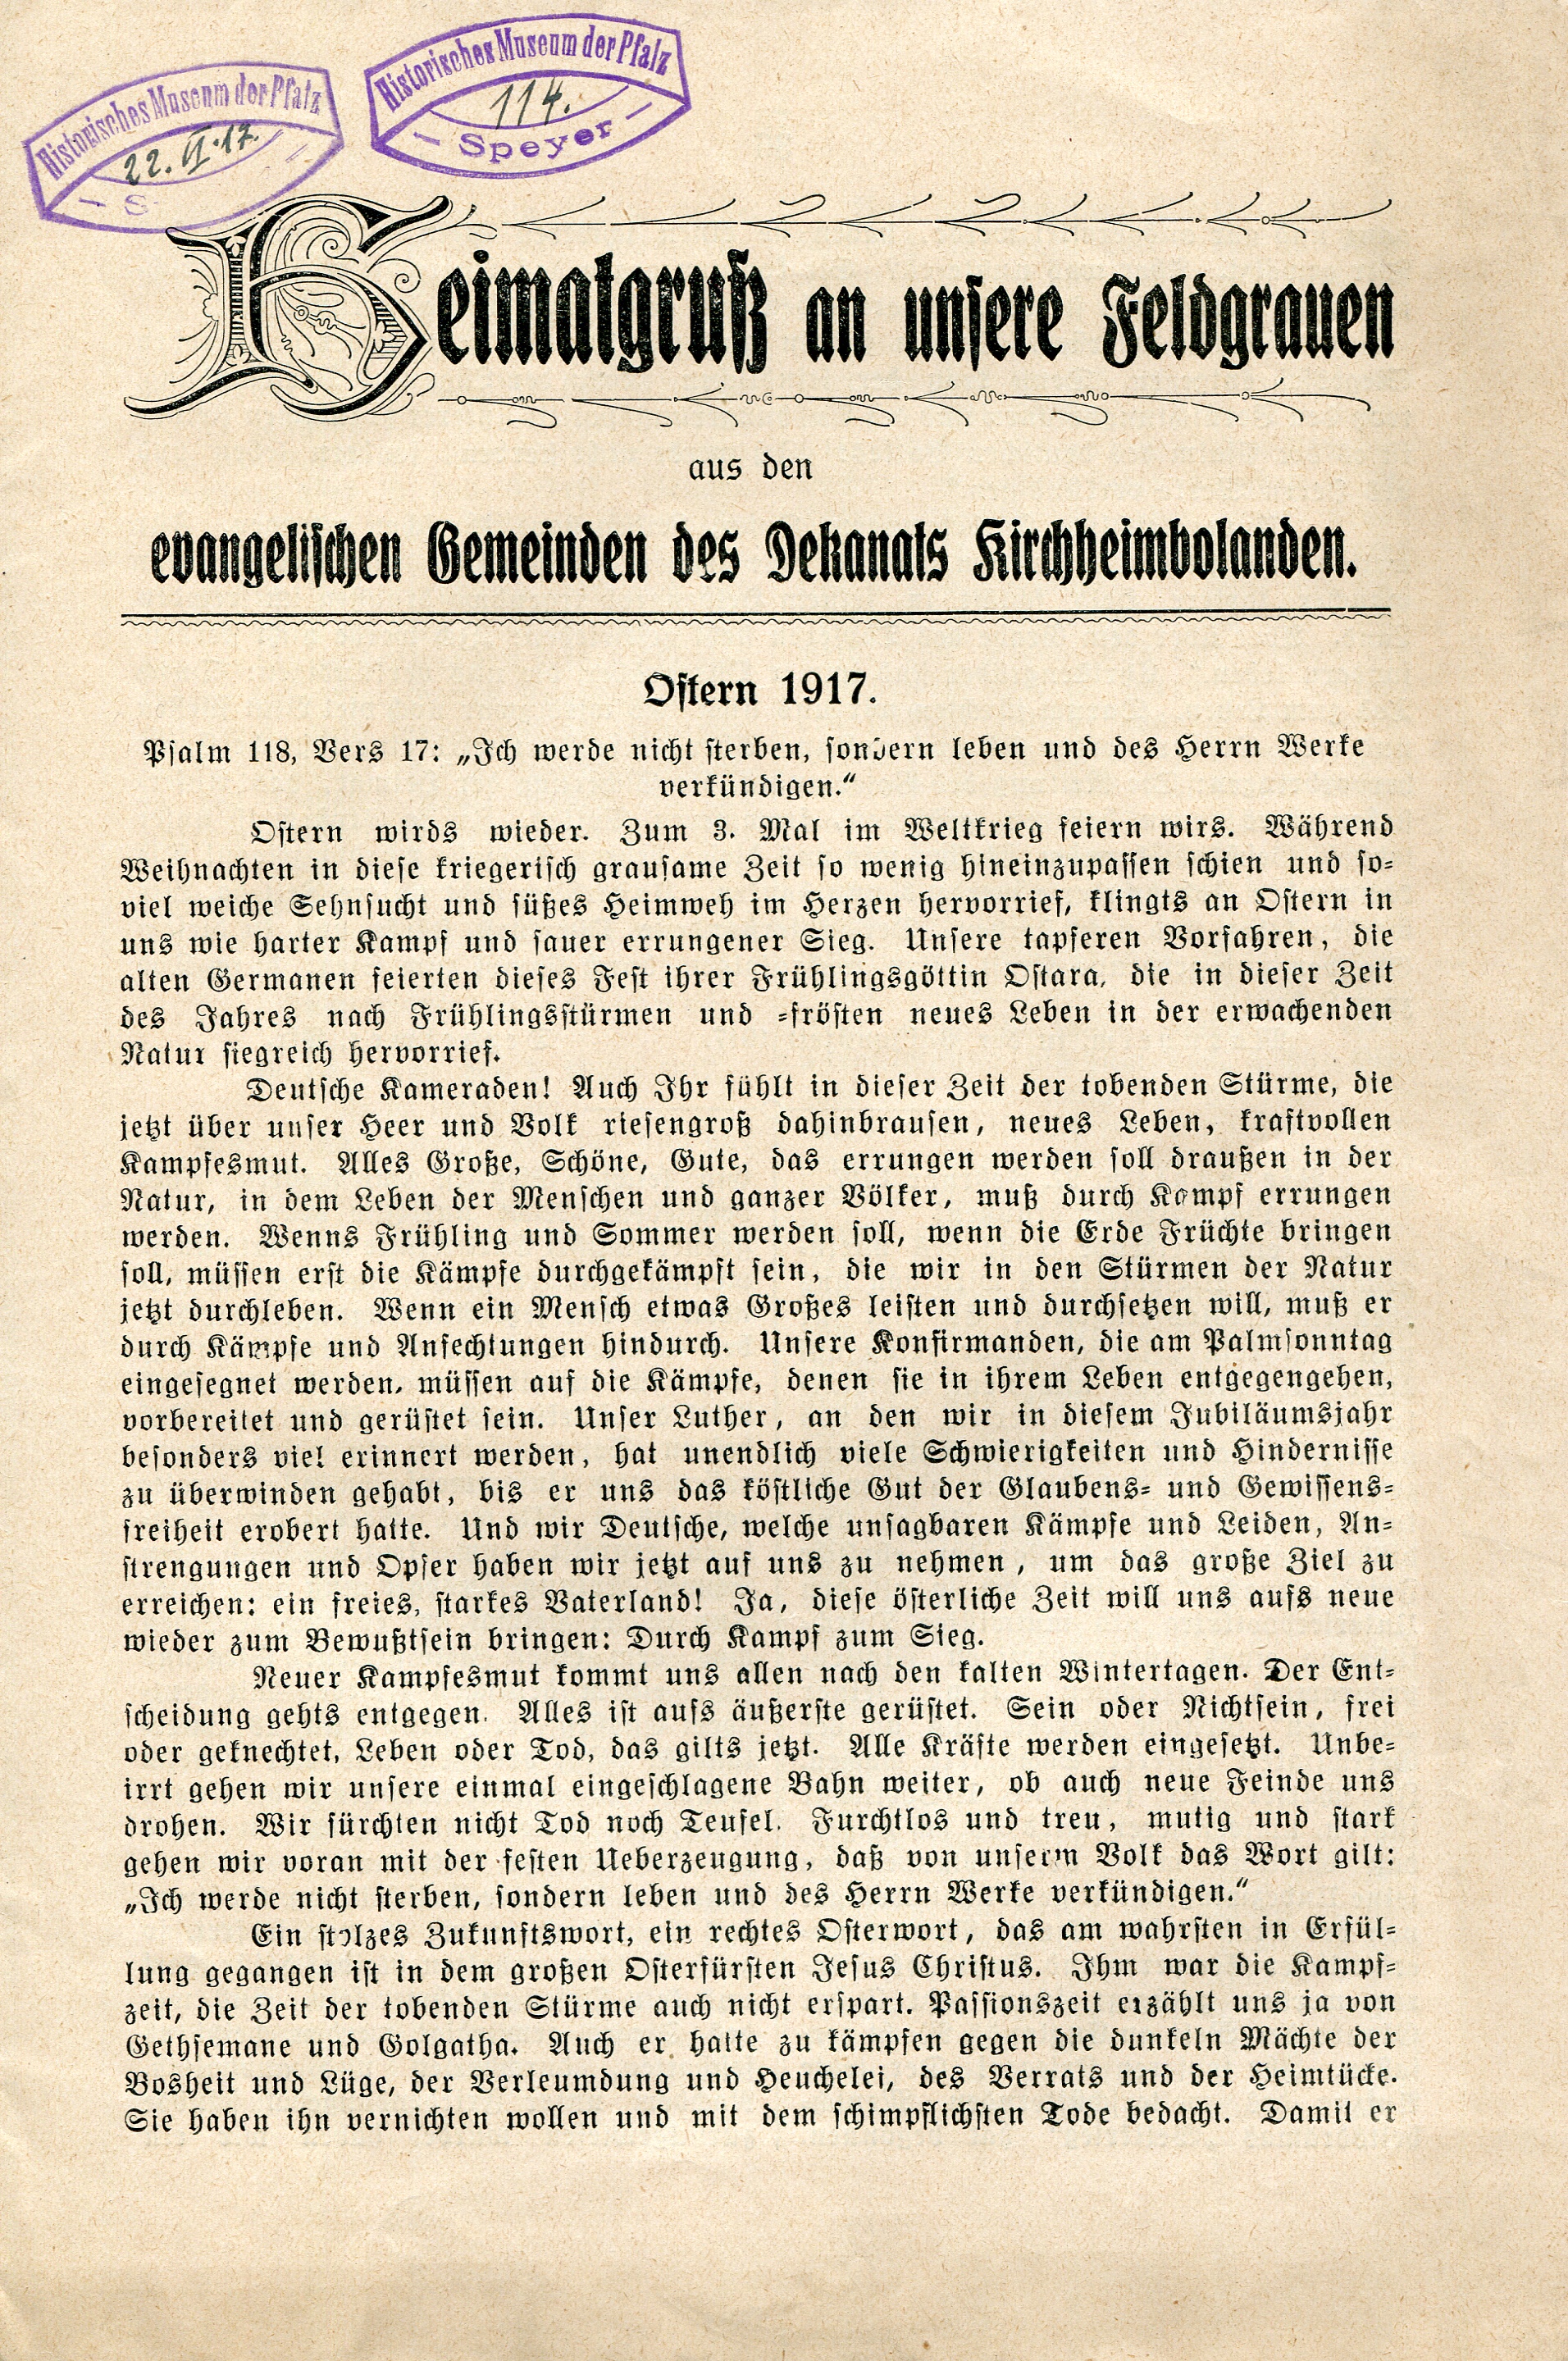 Dekanatsbrief Kirchheimbolanden, Ostern 1917: "Heimatgruß an unsere Feldgrauen" (Historisches Museum der Pfalz, Speyer CC BY-NC-ND)